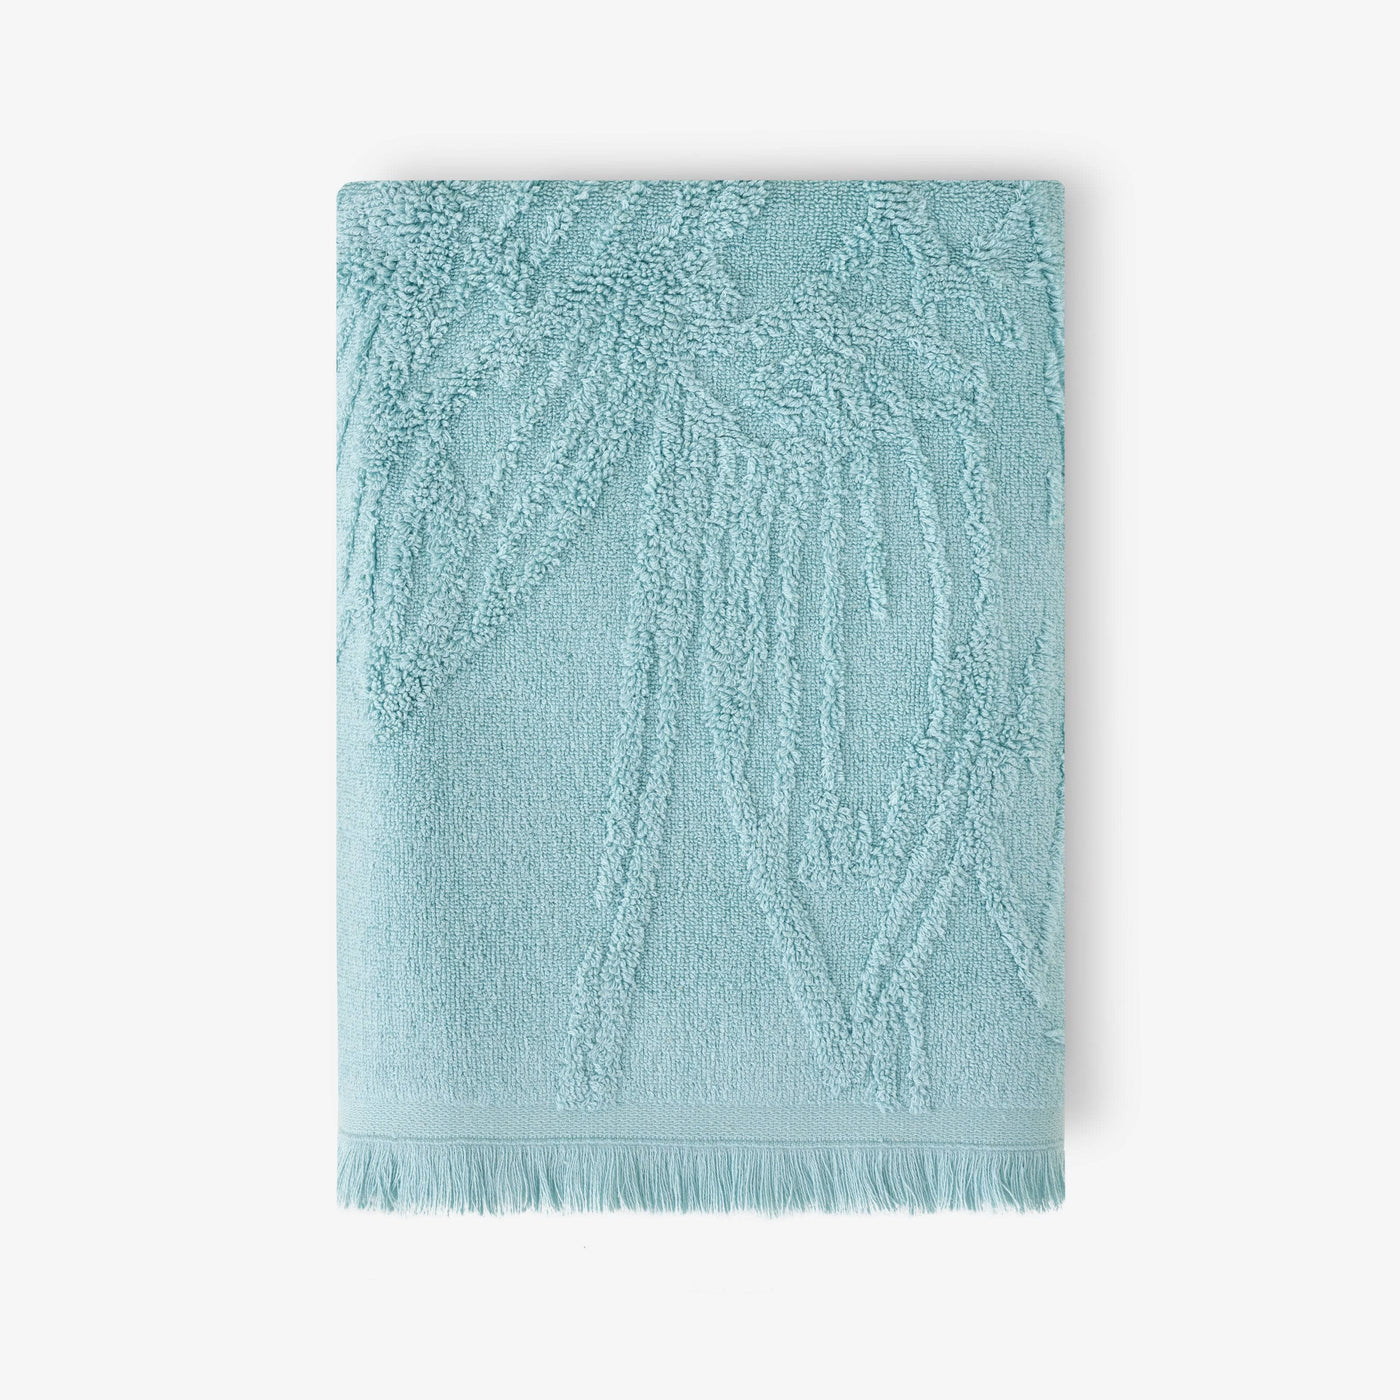 Barbara Set of 2 Jacquard Fringed 100% Turkish Cotton Hand Towel, Light Green, 50x90 cm 2